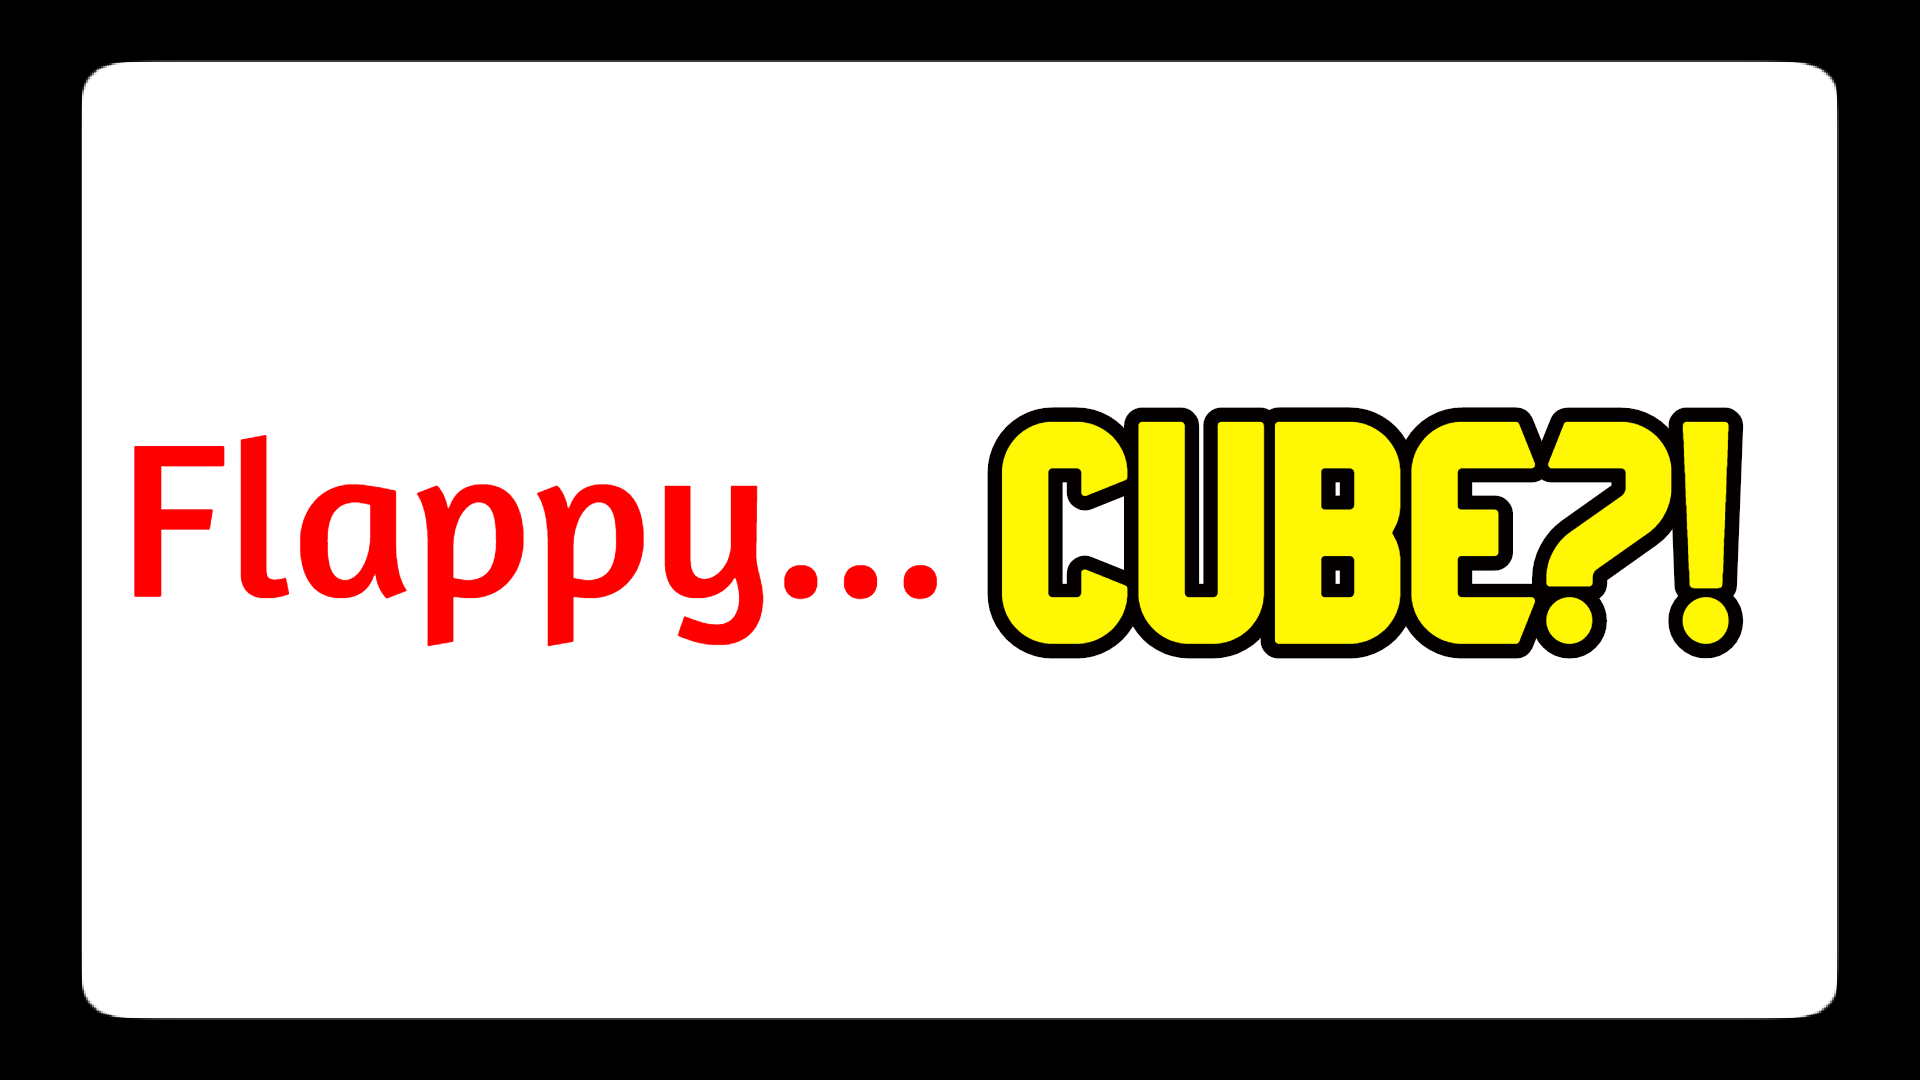 Flappy...Cube?!